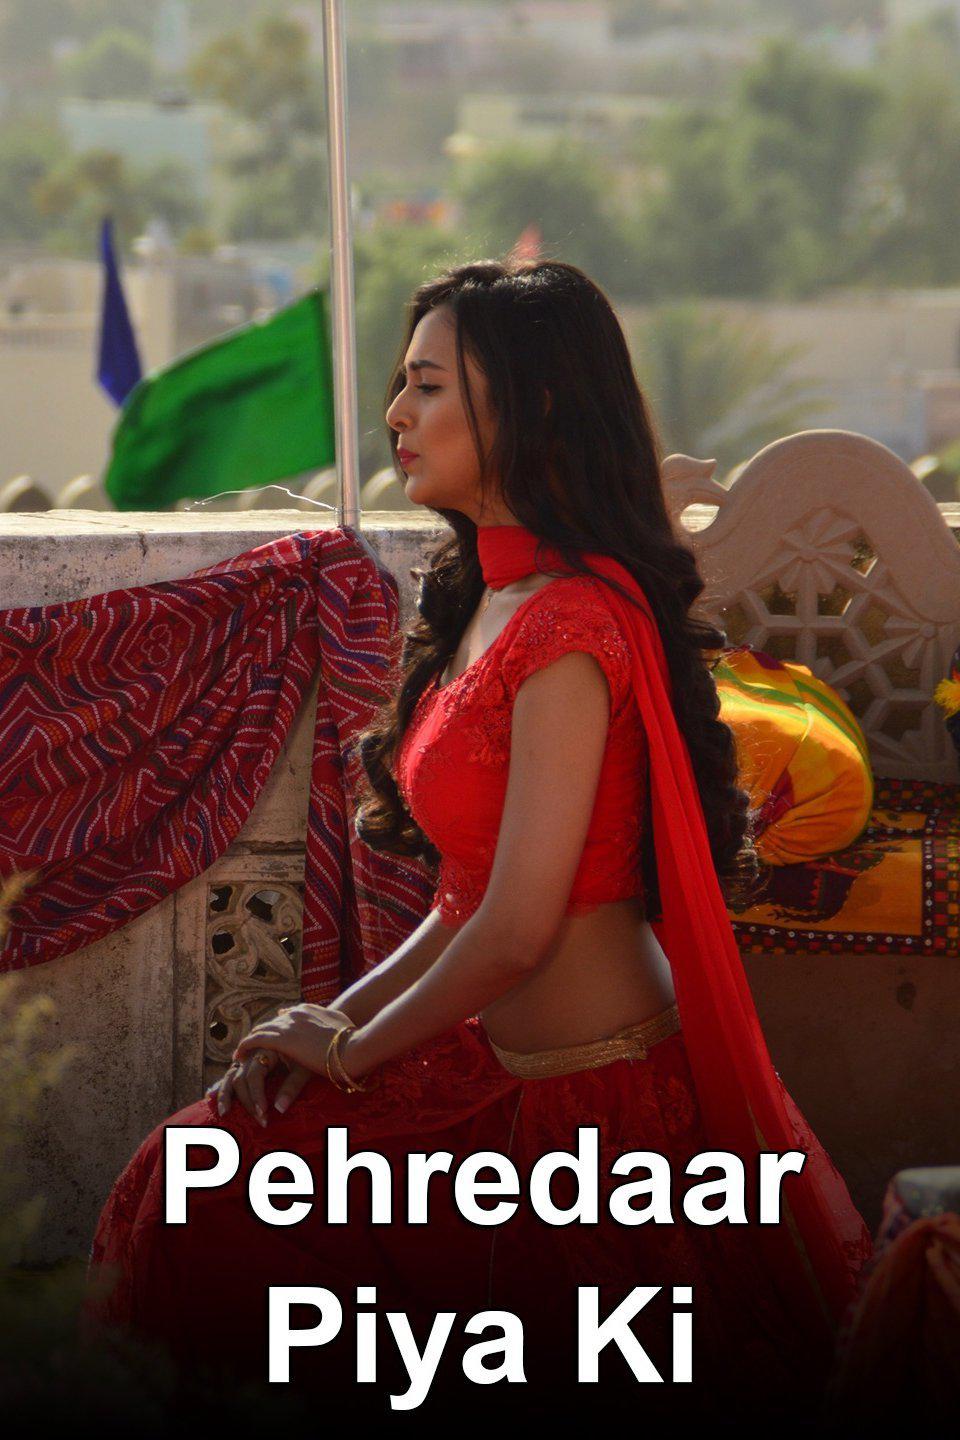 TV ratings for Pehredaar Piya Ki in the United Kingdom. Sony Entertainment Television TV series